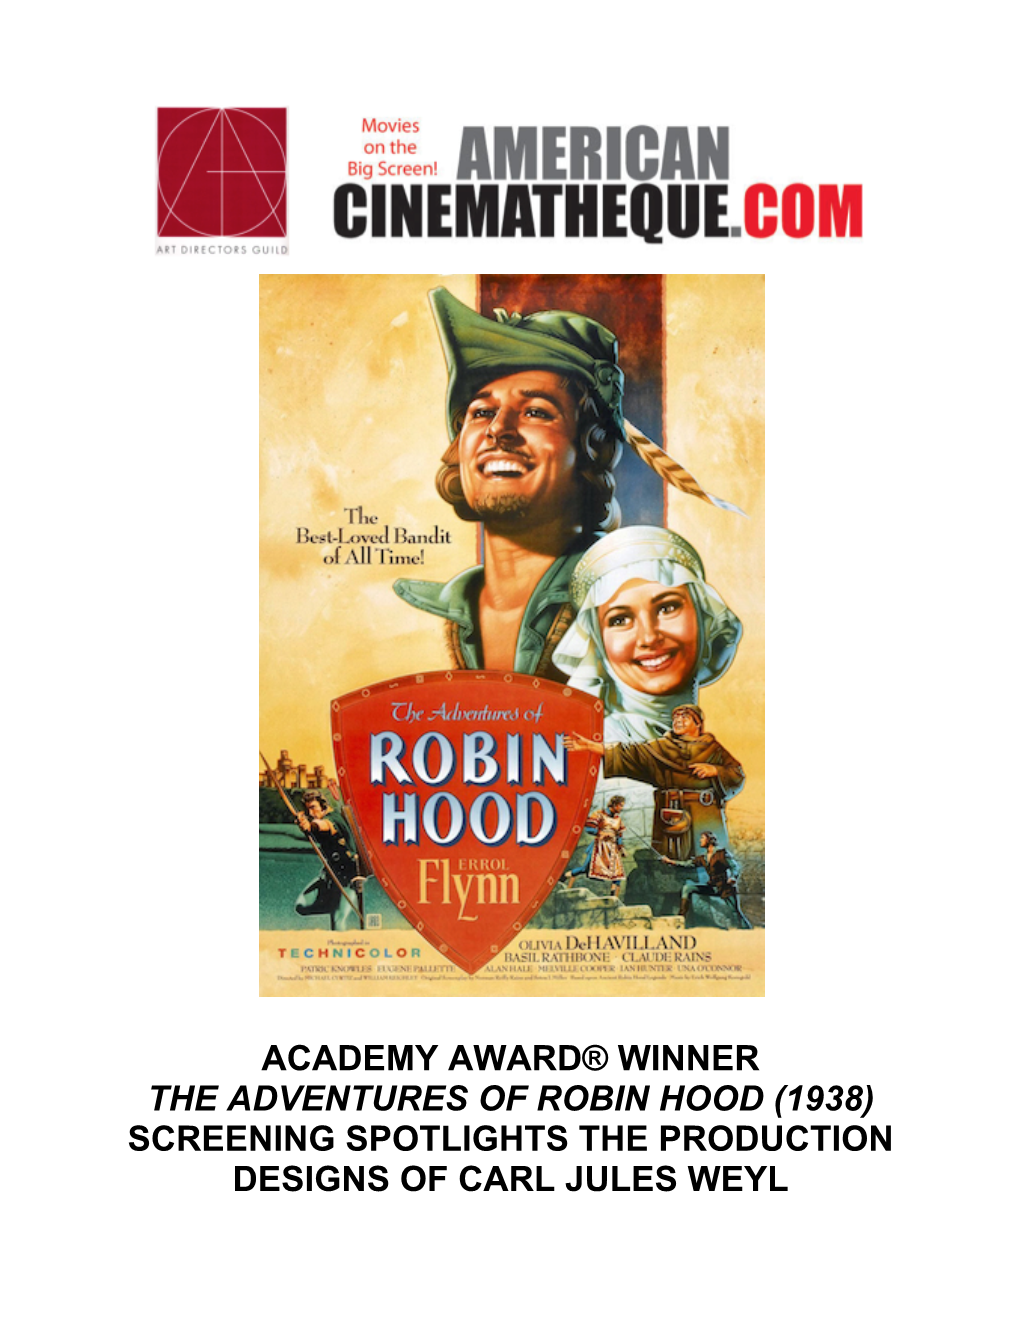 Academy Award® Winner the Adventures of Robin Hood